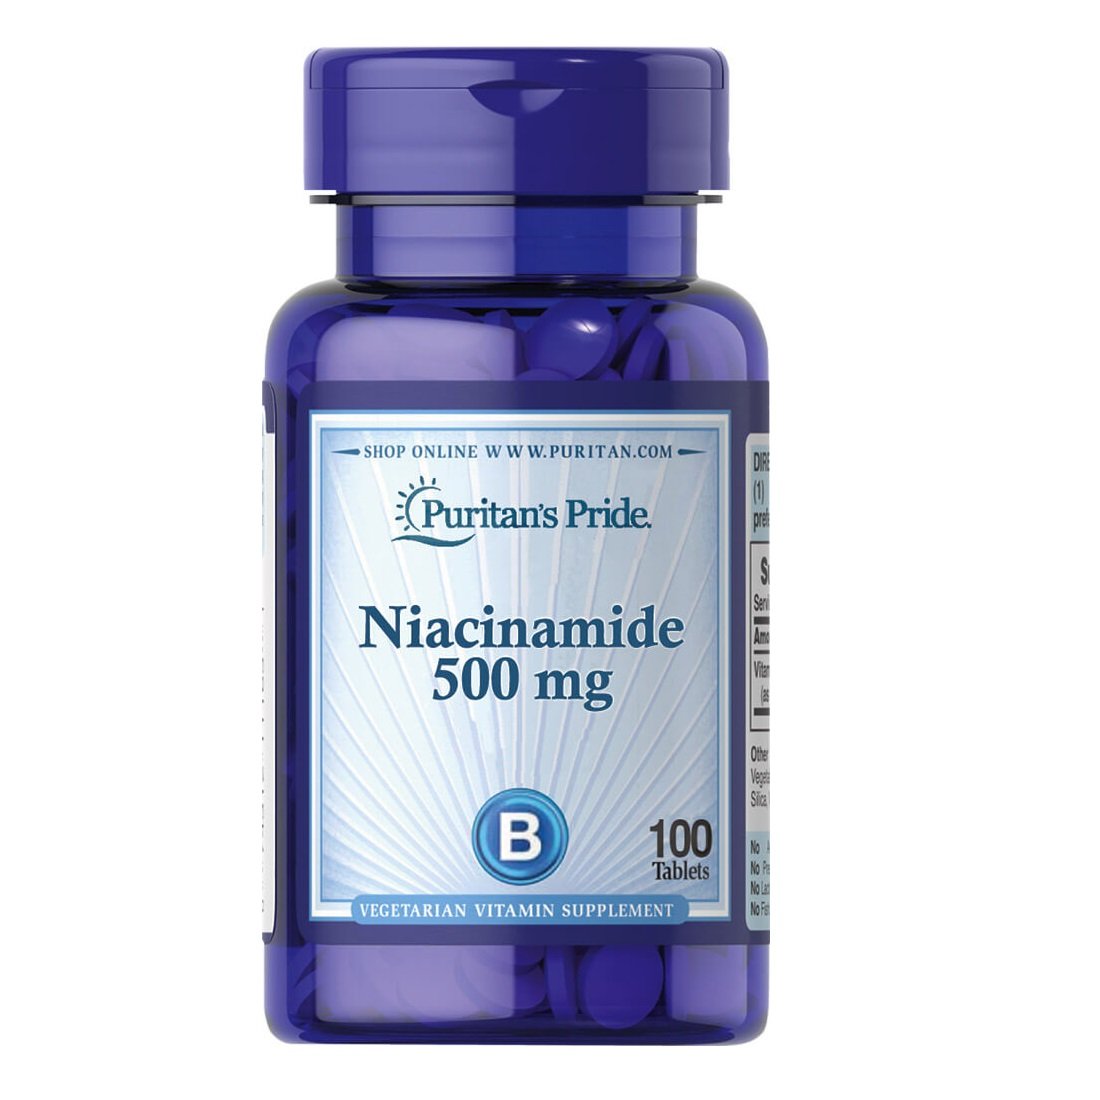 Puritan's Pride Витамины и минералы Puritan's Pride Niacinamide 500 mg, 100 таблеток, , 